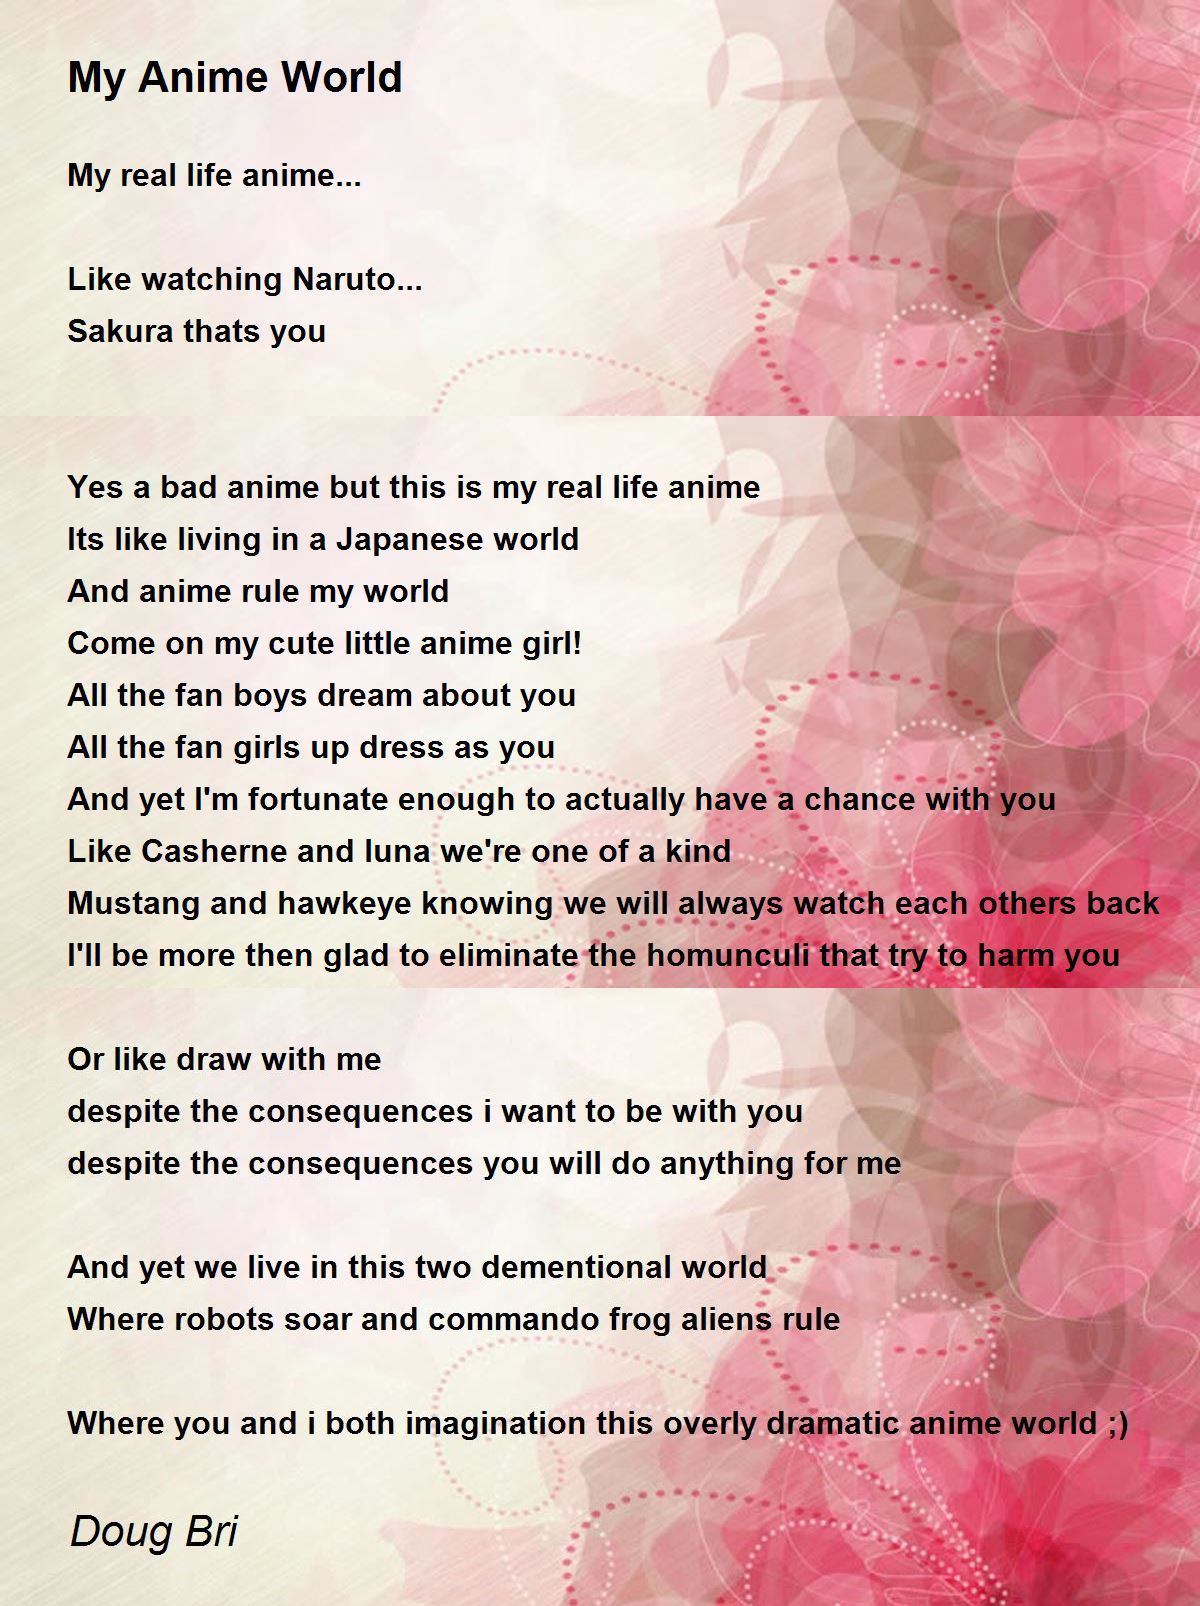 My Anime World - My Anime World Poem by Doug Bri